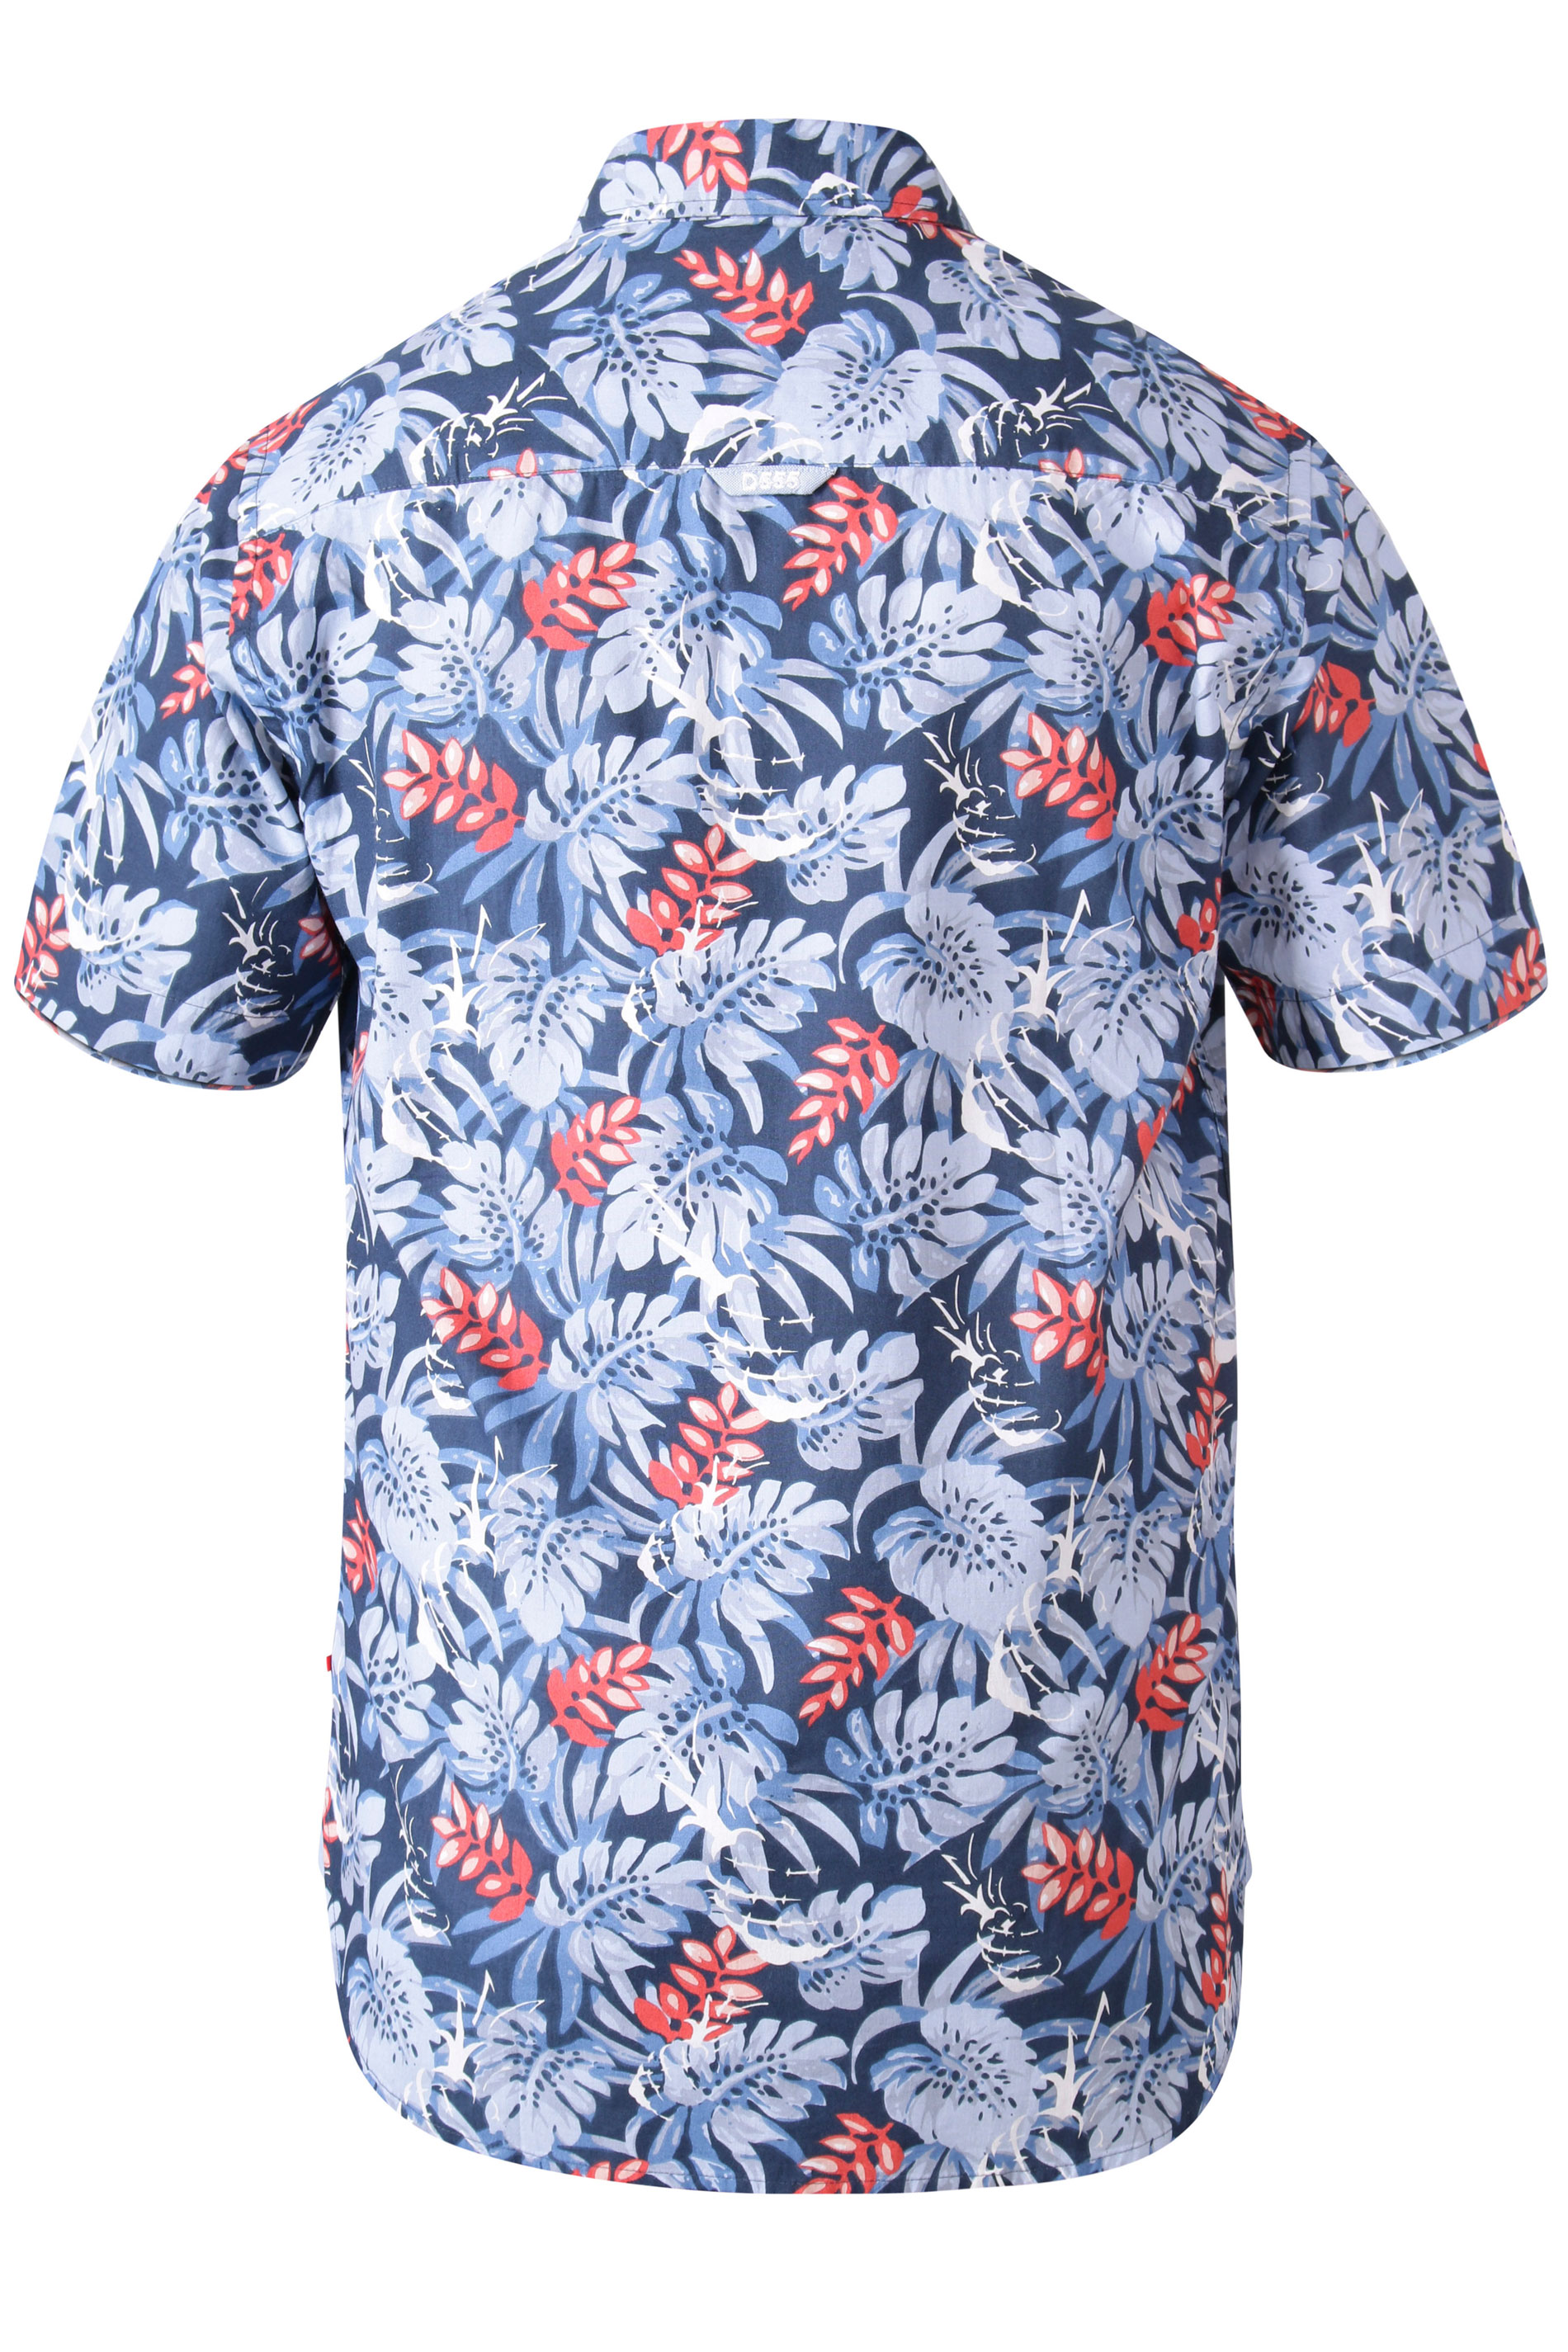 D555 Blue Hawaiian Print Shirt | BadRhino